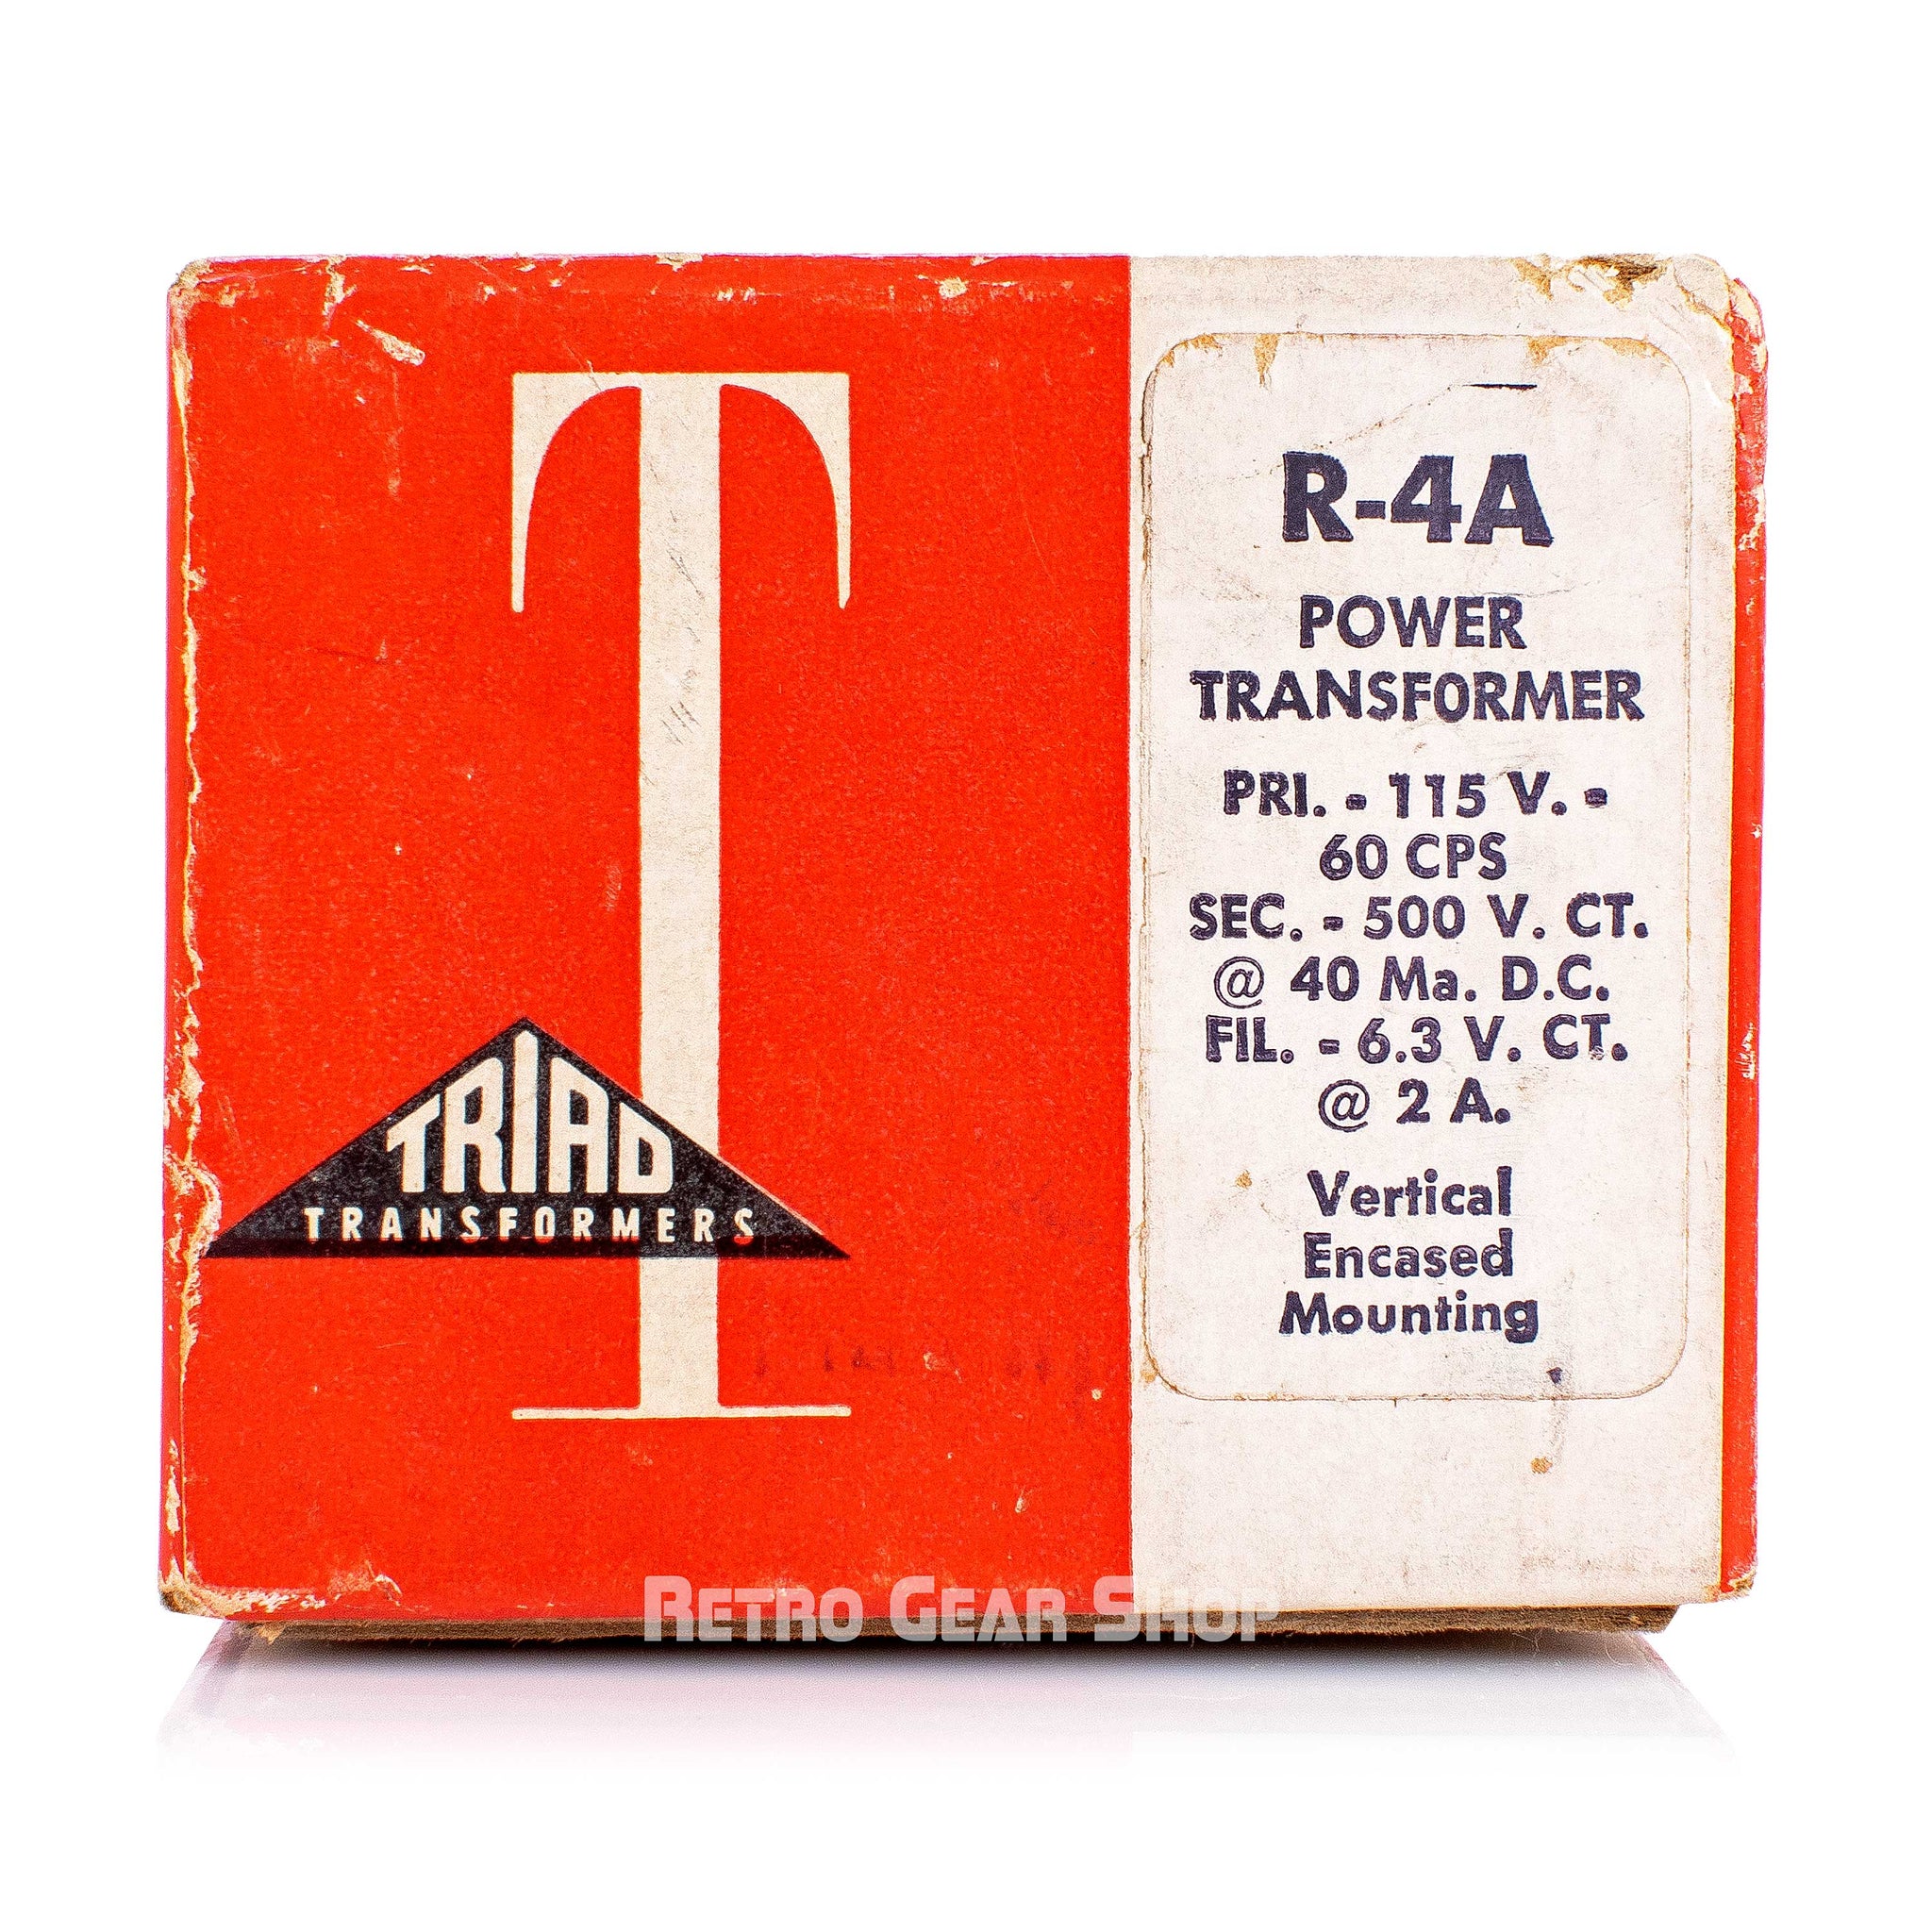 Triad Transformer Corp R-4A Power Transformer Corp NOS Vintage 